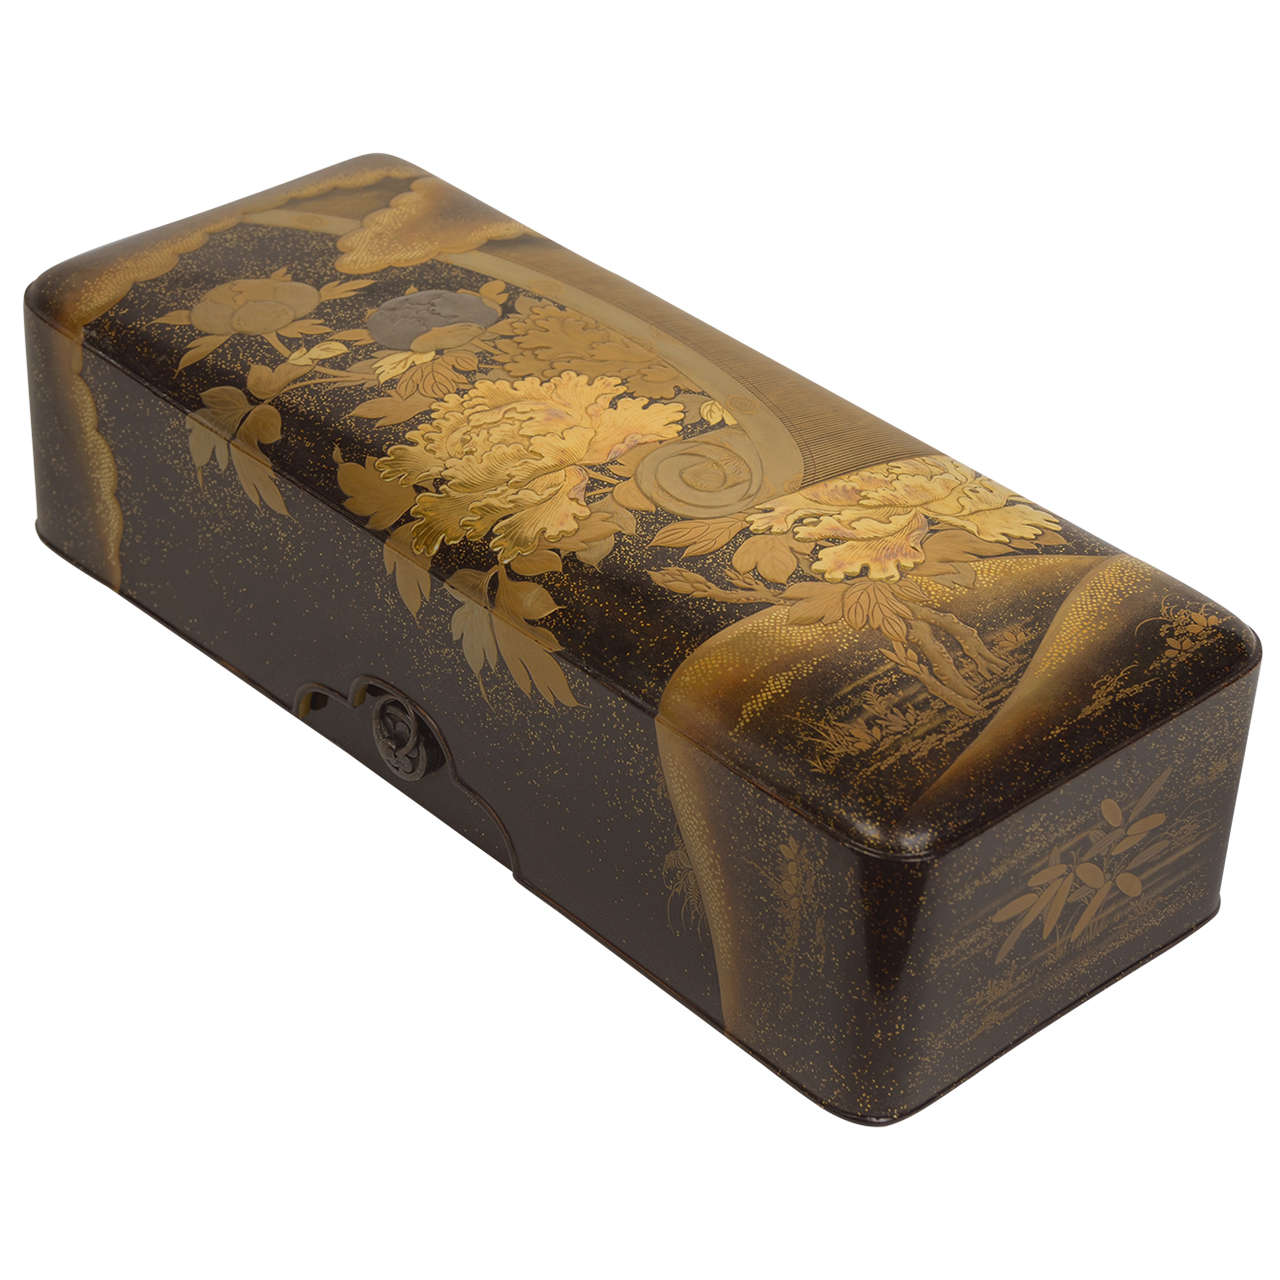 19th Century Japanese Lacquer Fubako or Letter Box, Mon Family Horita